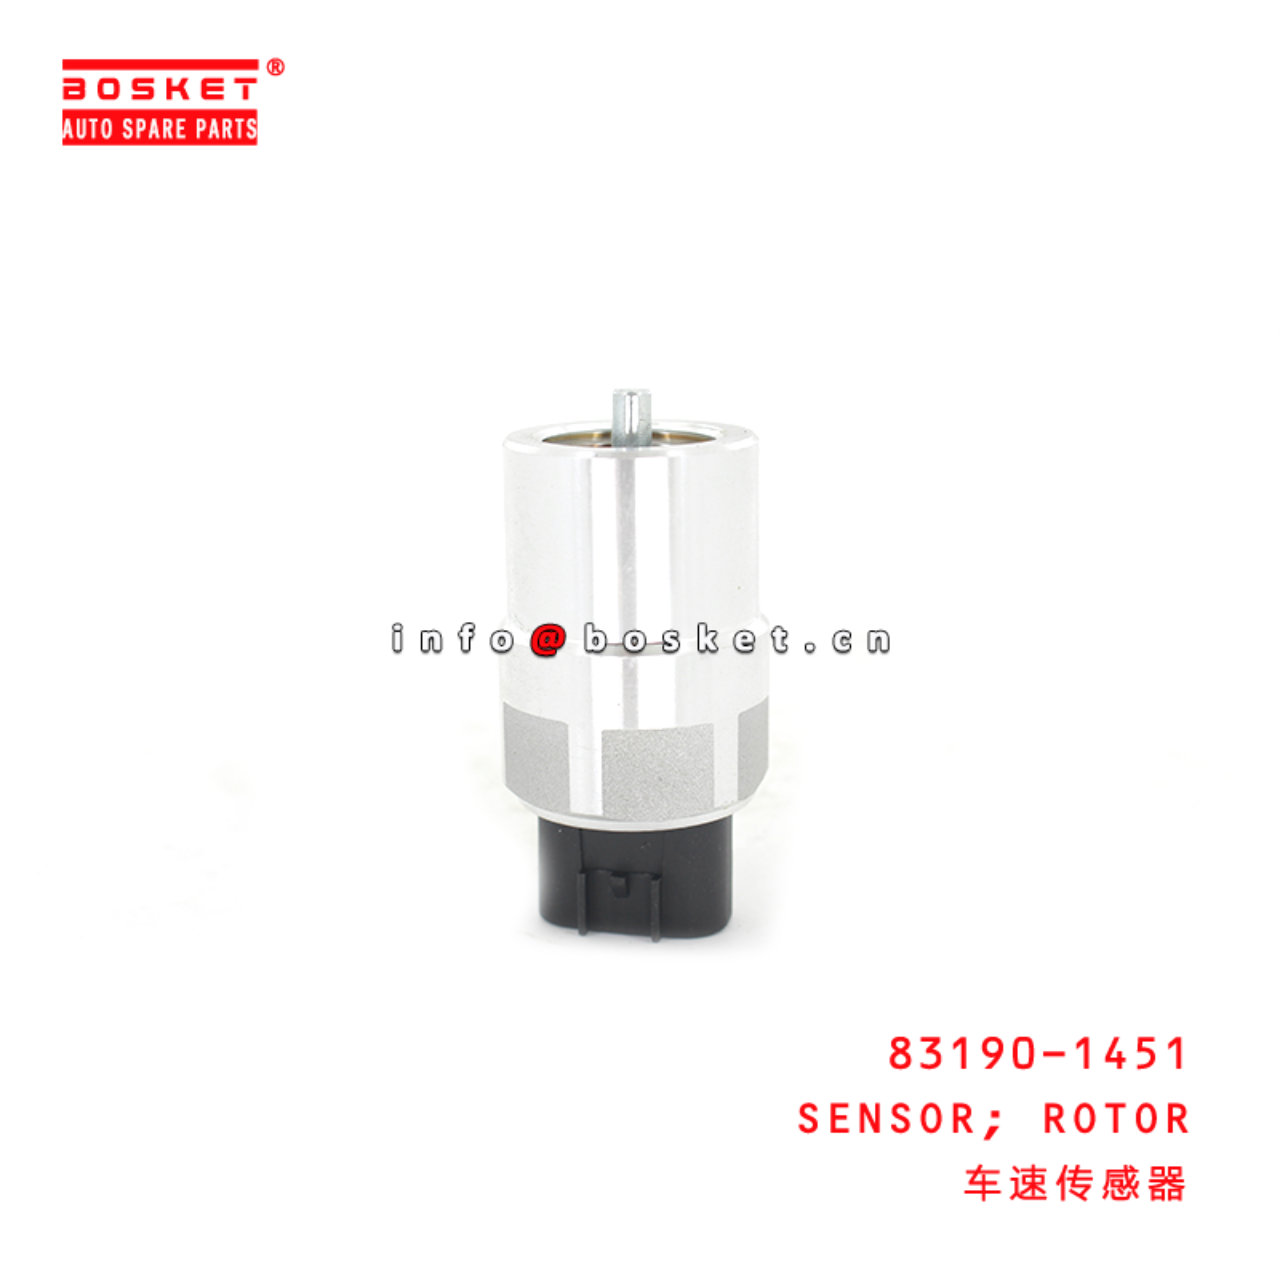 83190-1451 Rotor Sensor Suitable for ISUZU HINO